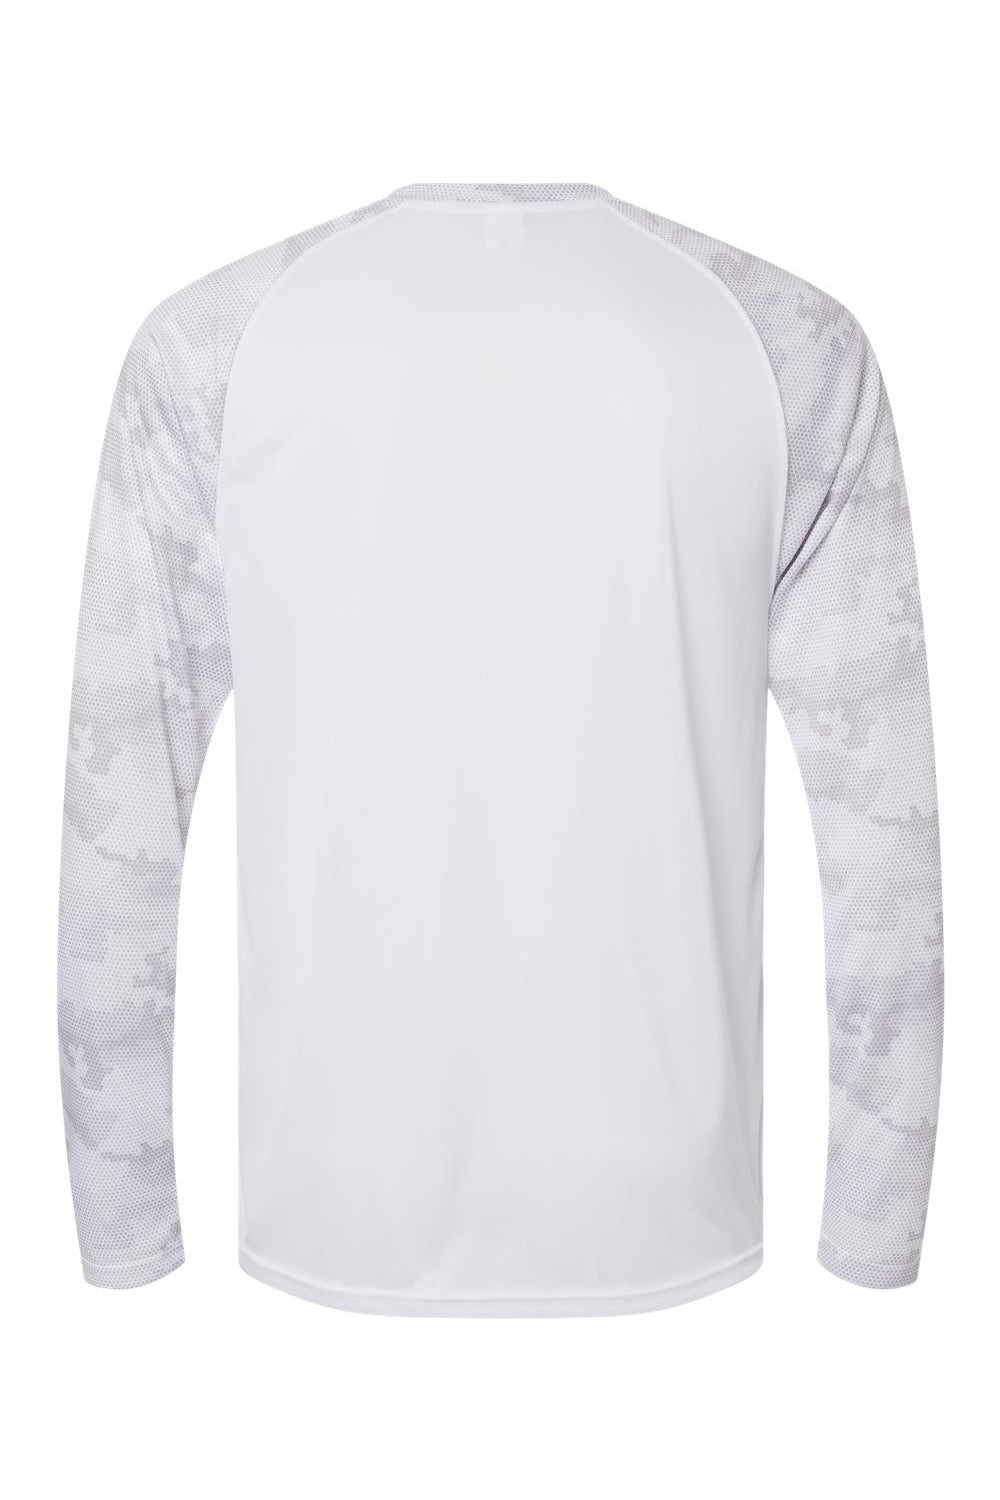 Paragon 216 Mens Cayman Performance Camo Colorblocked Long Sleeve Crewneck T-Shirt White Flat Back